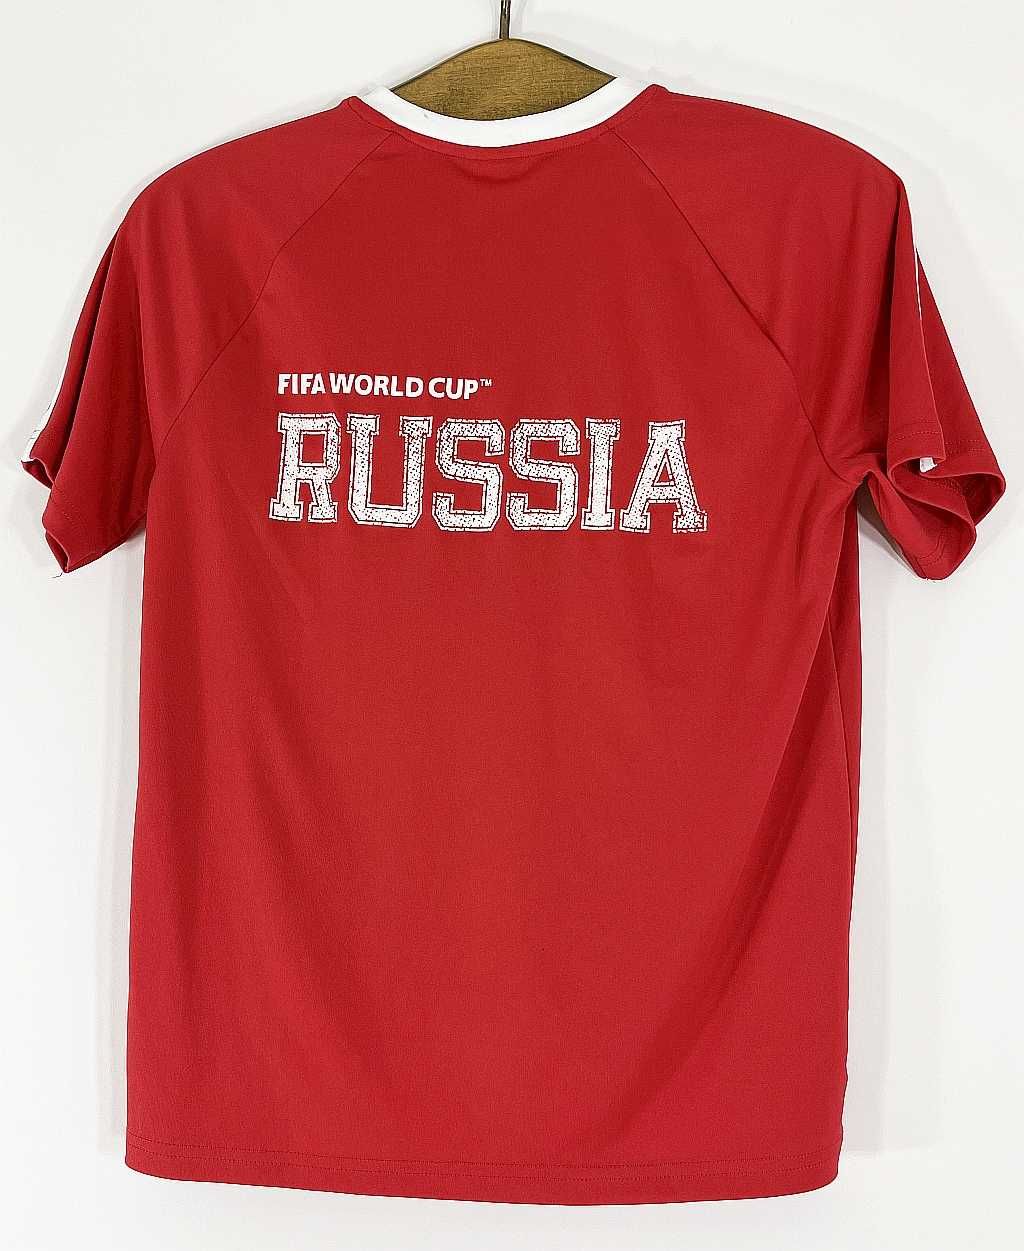 T-shirt koszulka chłopięca czerwona Fifa World Cup R 152 / 158